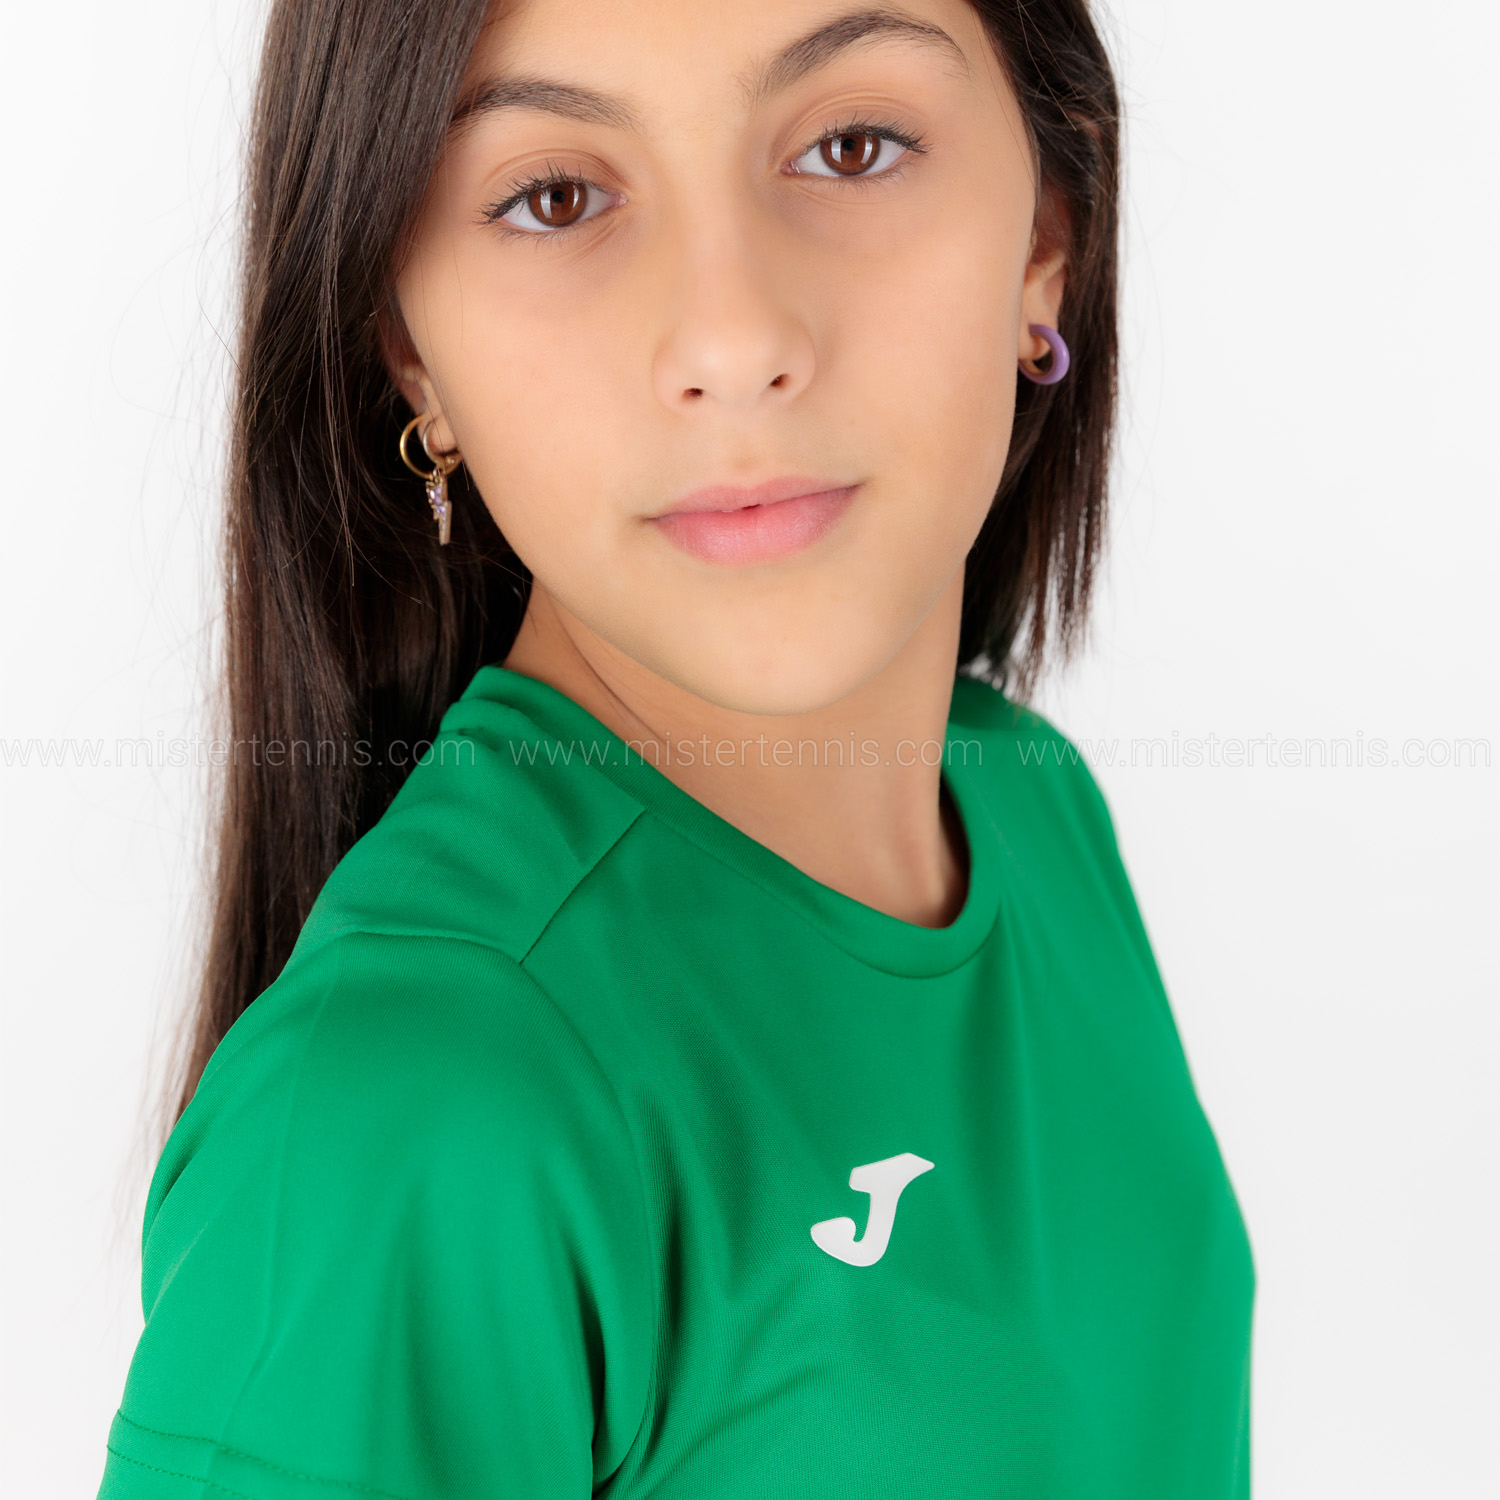 Joma Combi T-Shirt Girl - Green